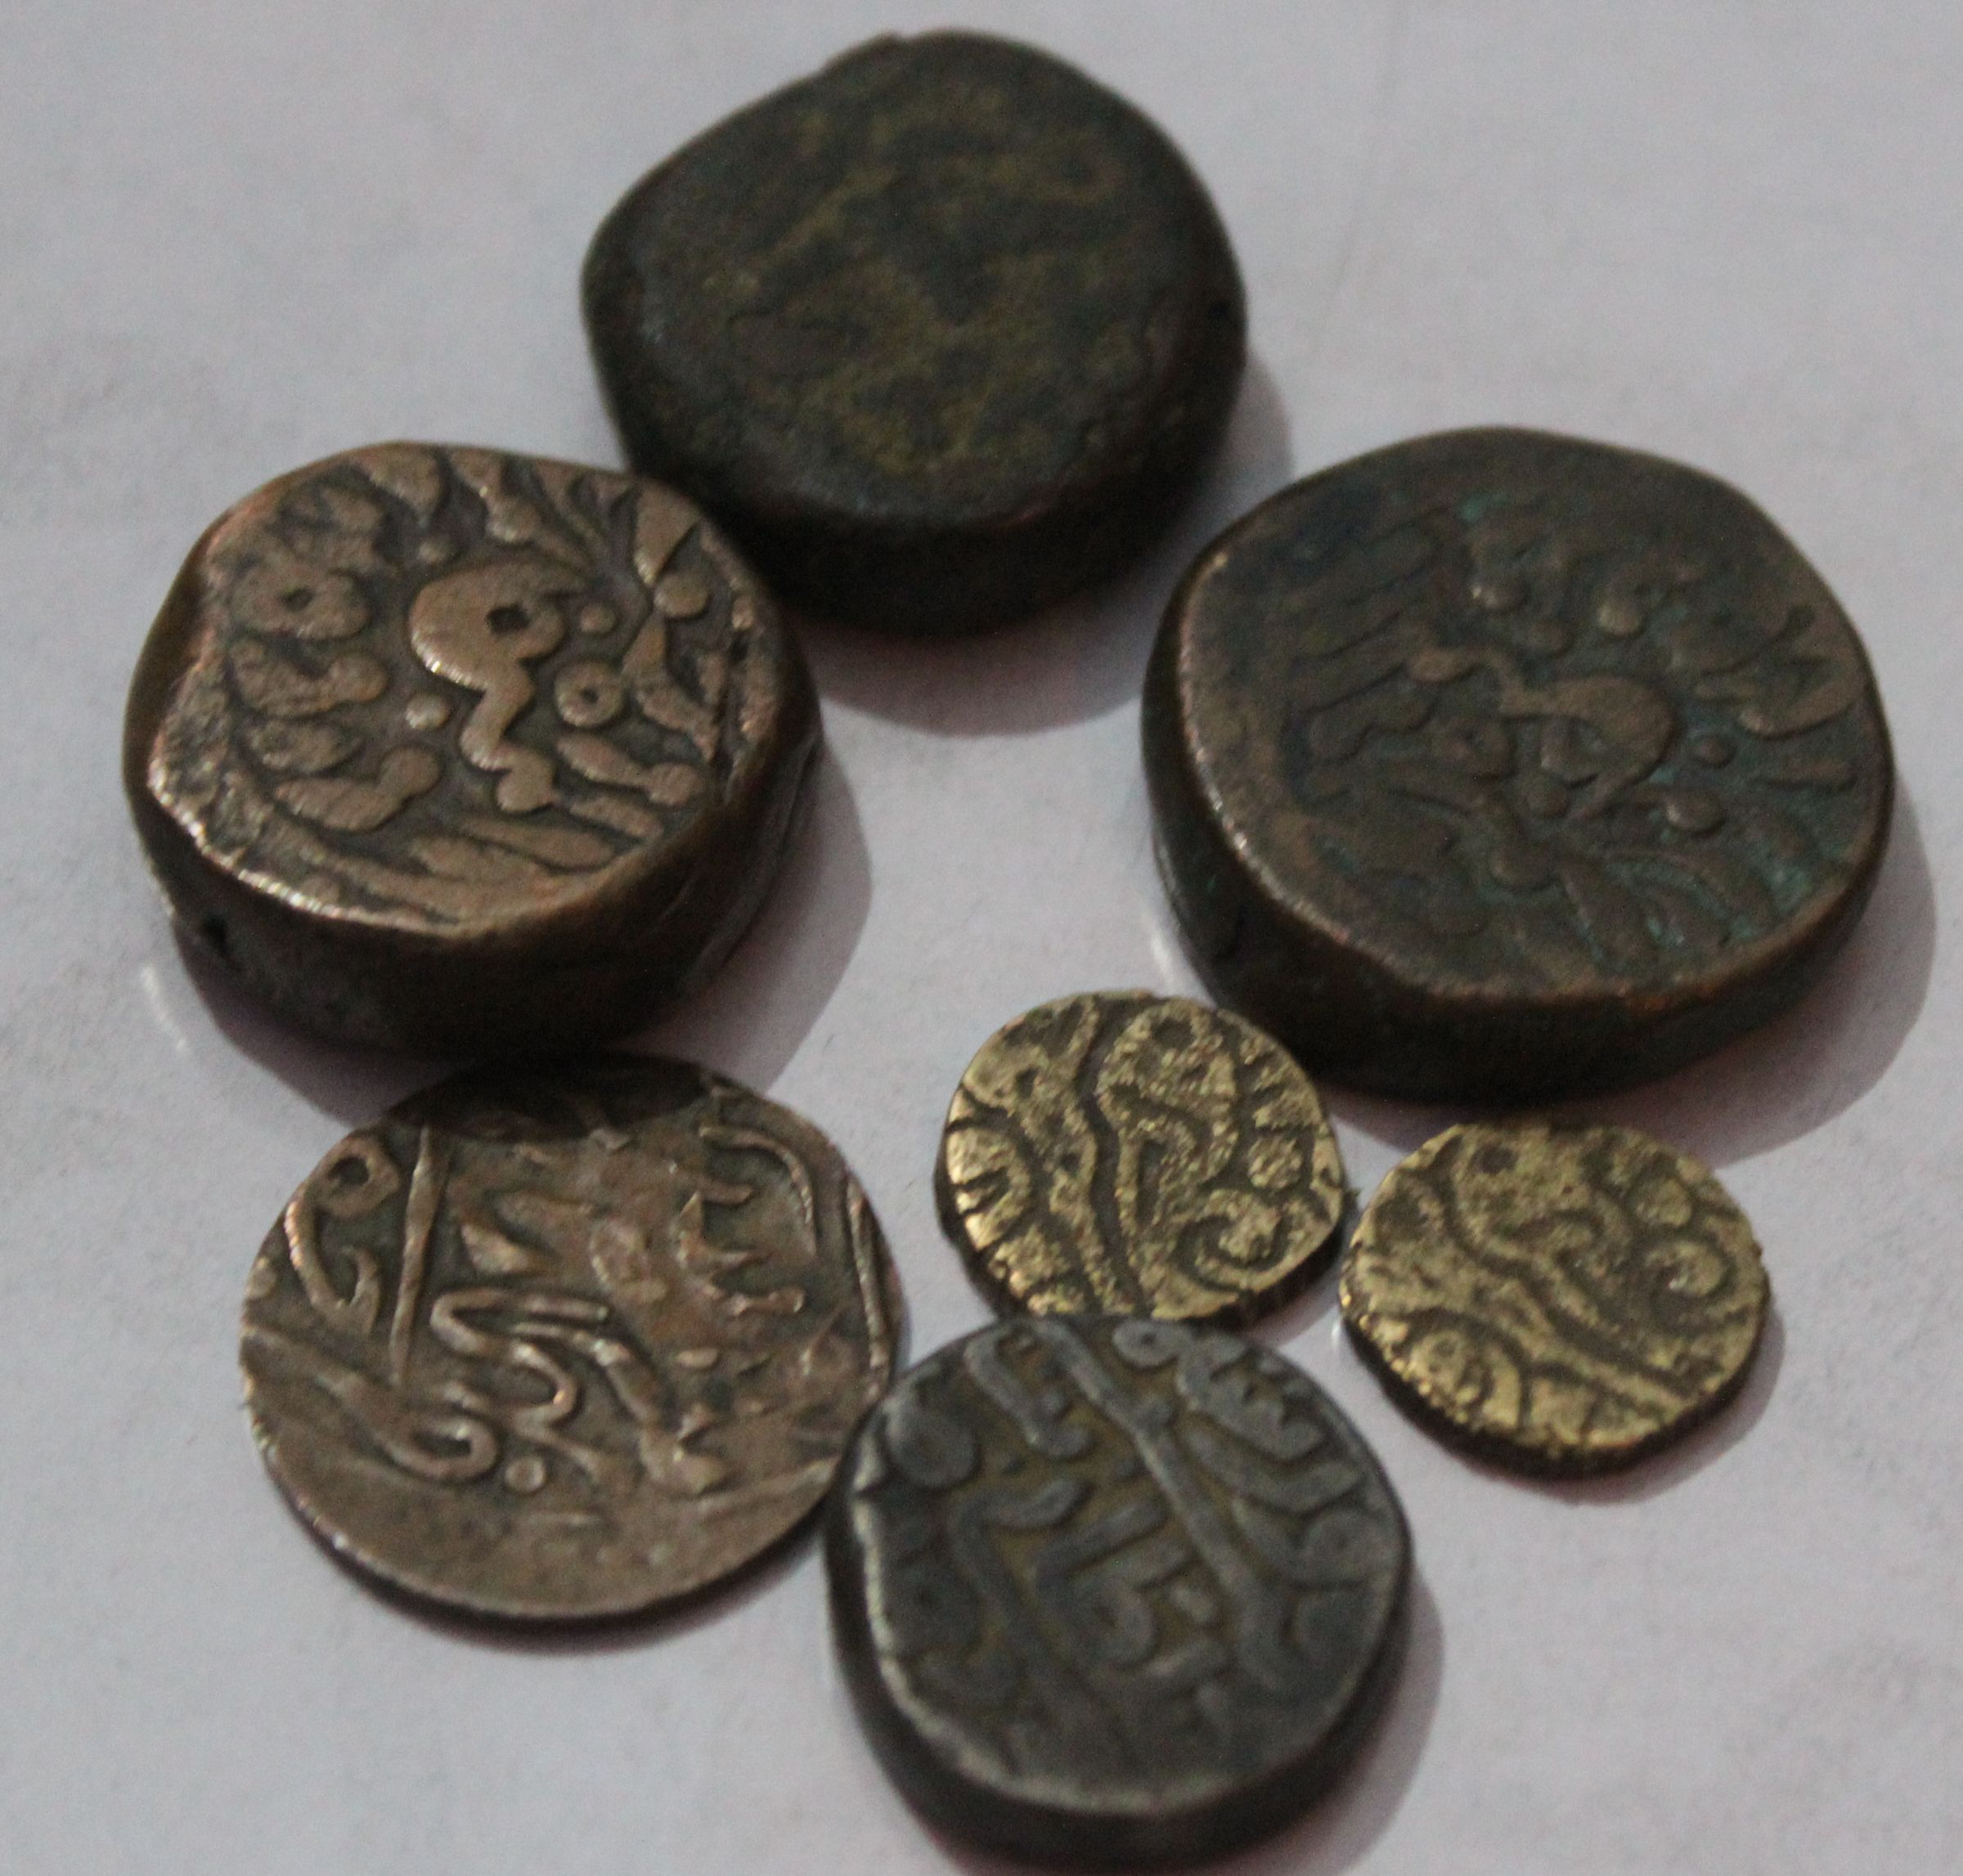 video: jodhpur: Teacher's love for coins